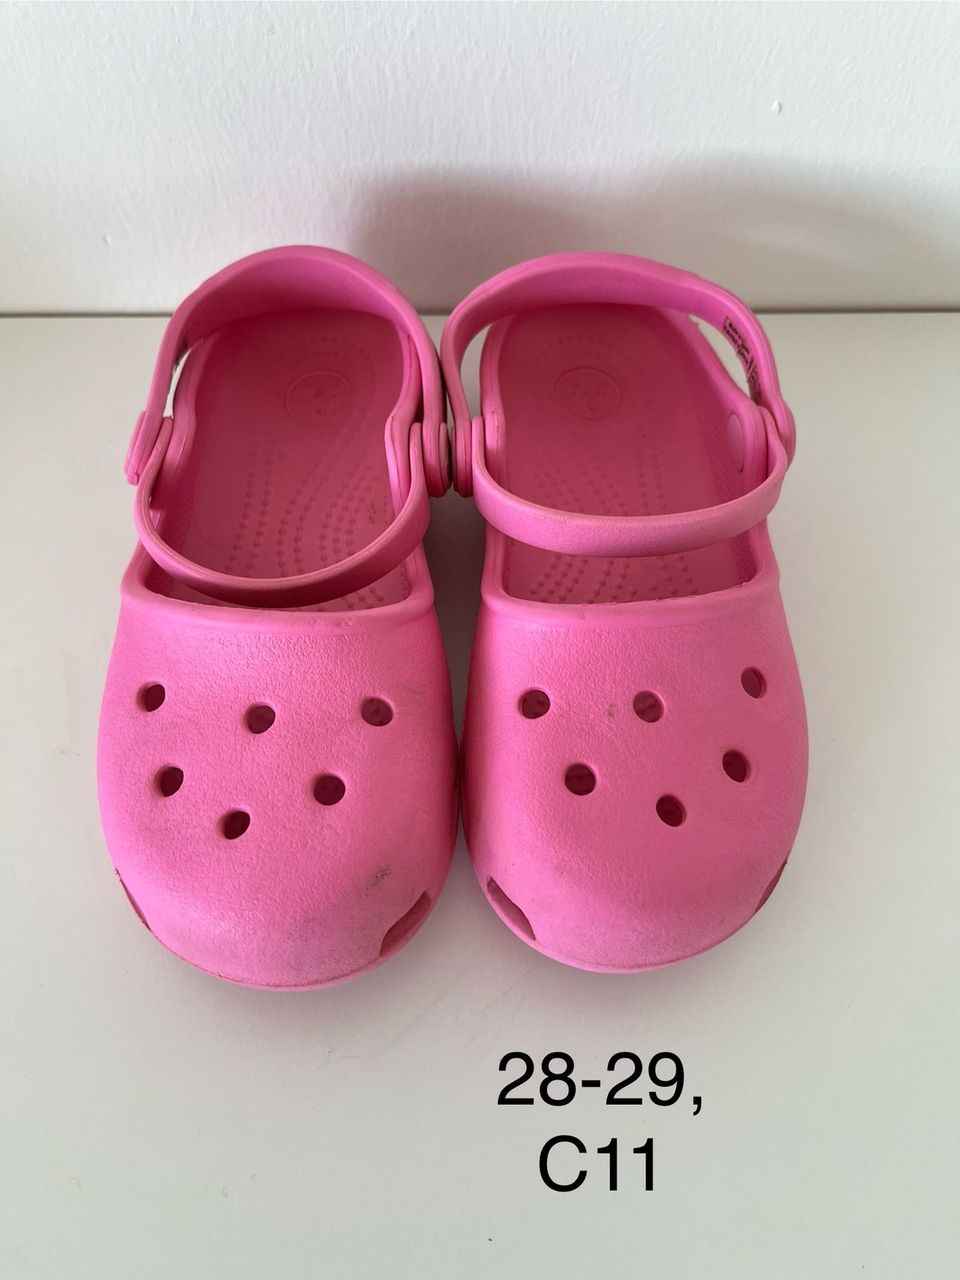 Crocs 28-29, 4€